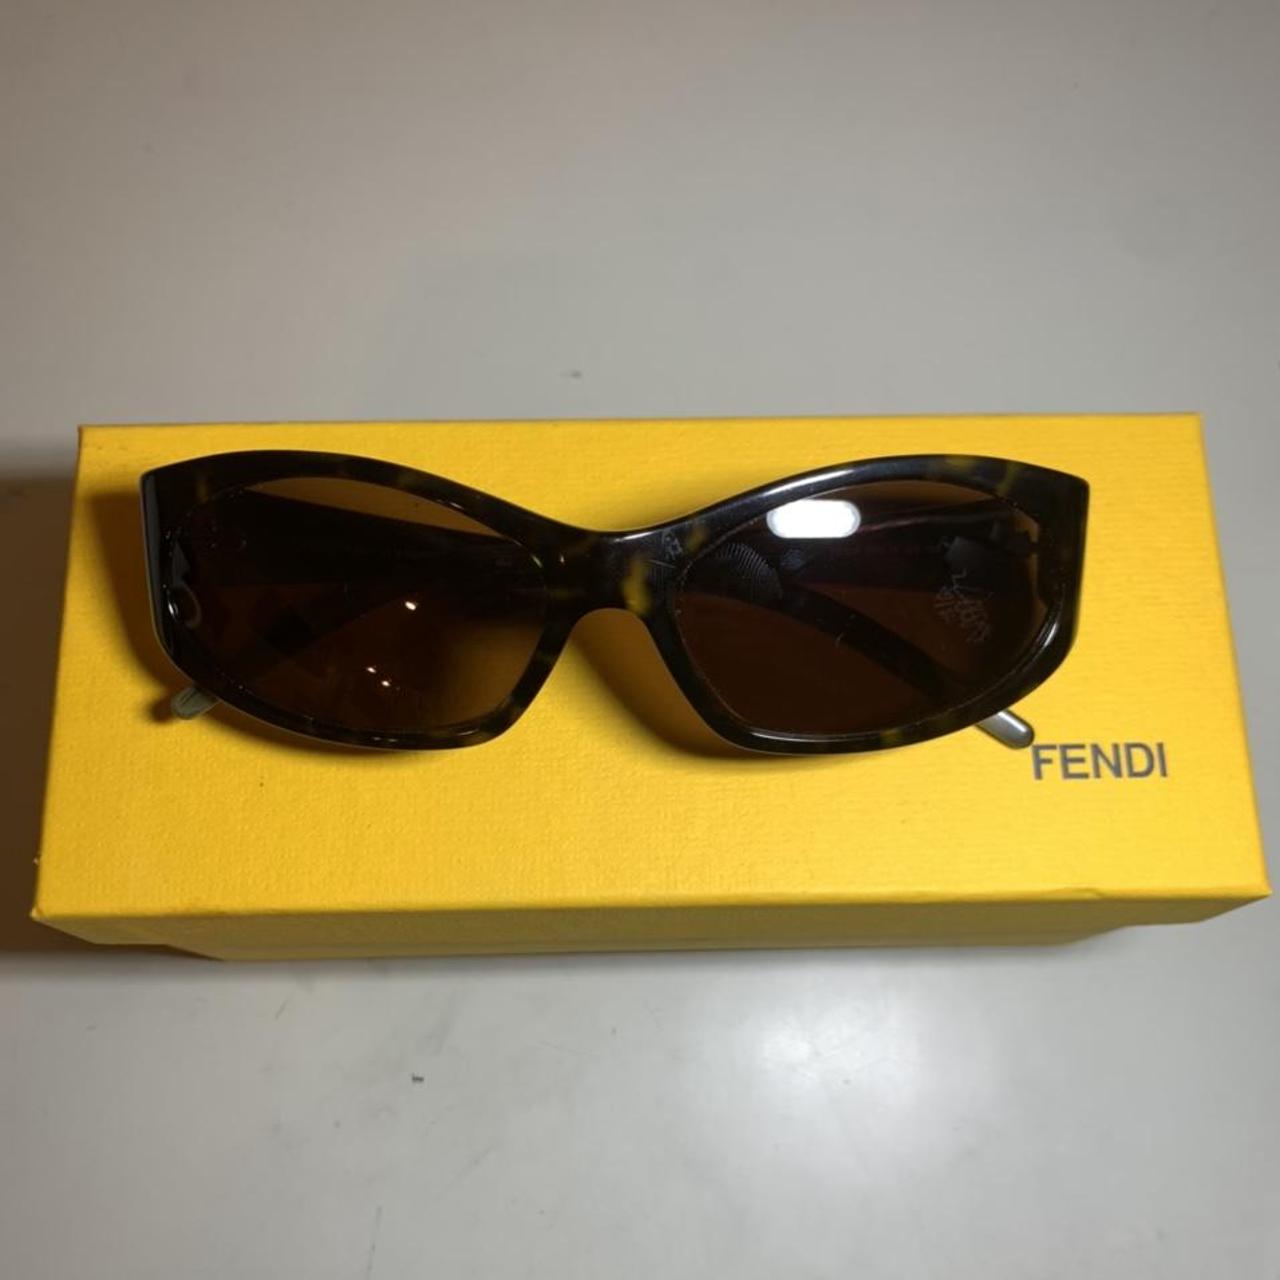 Fendi Women's Brown and Black Sunglasses | Depop